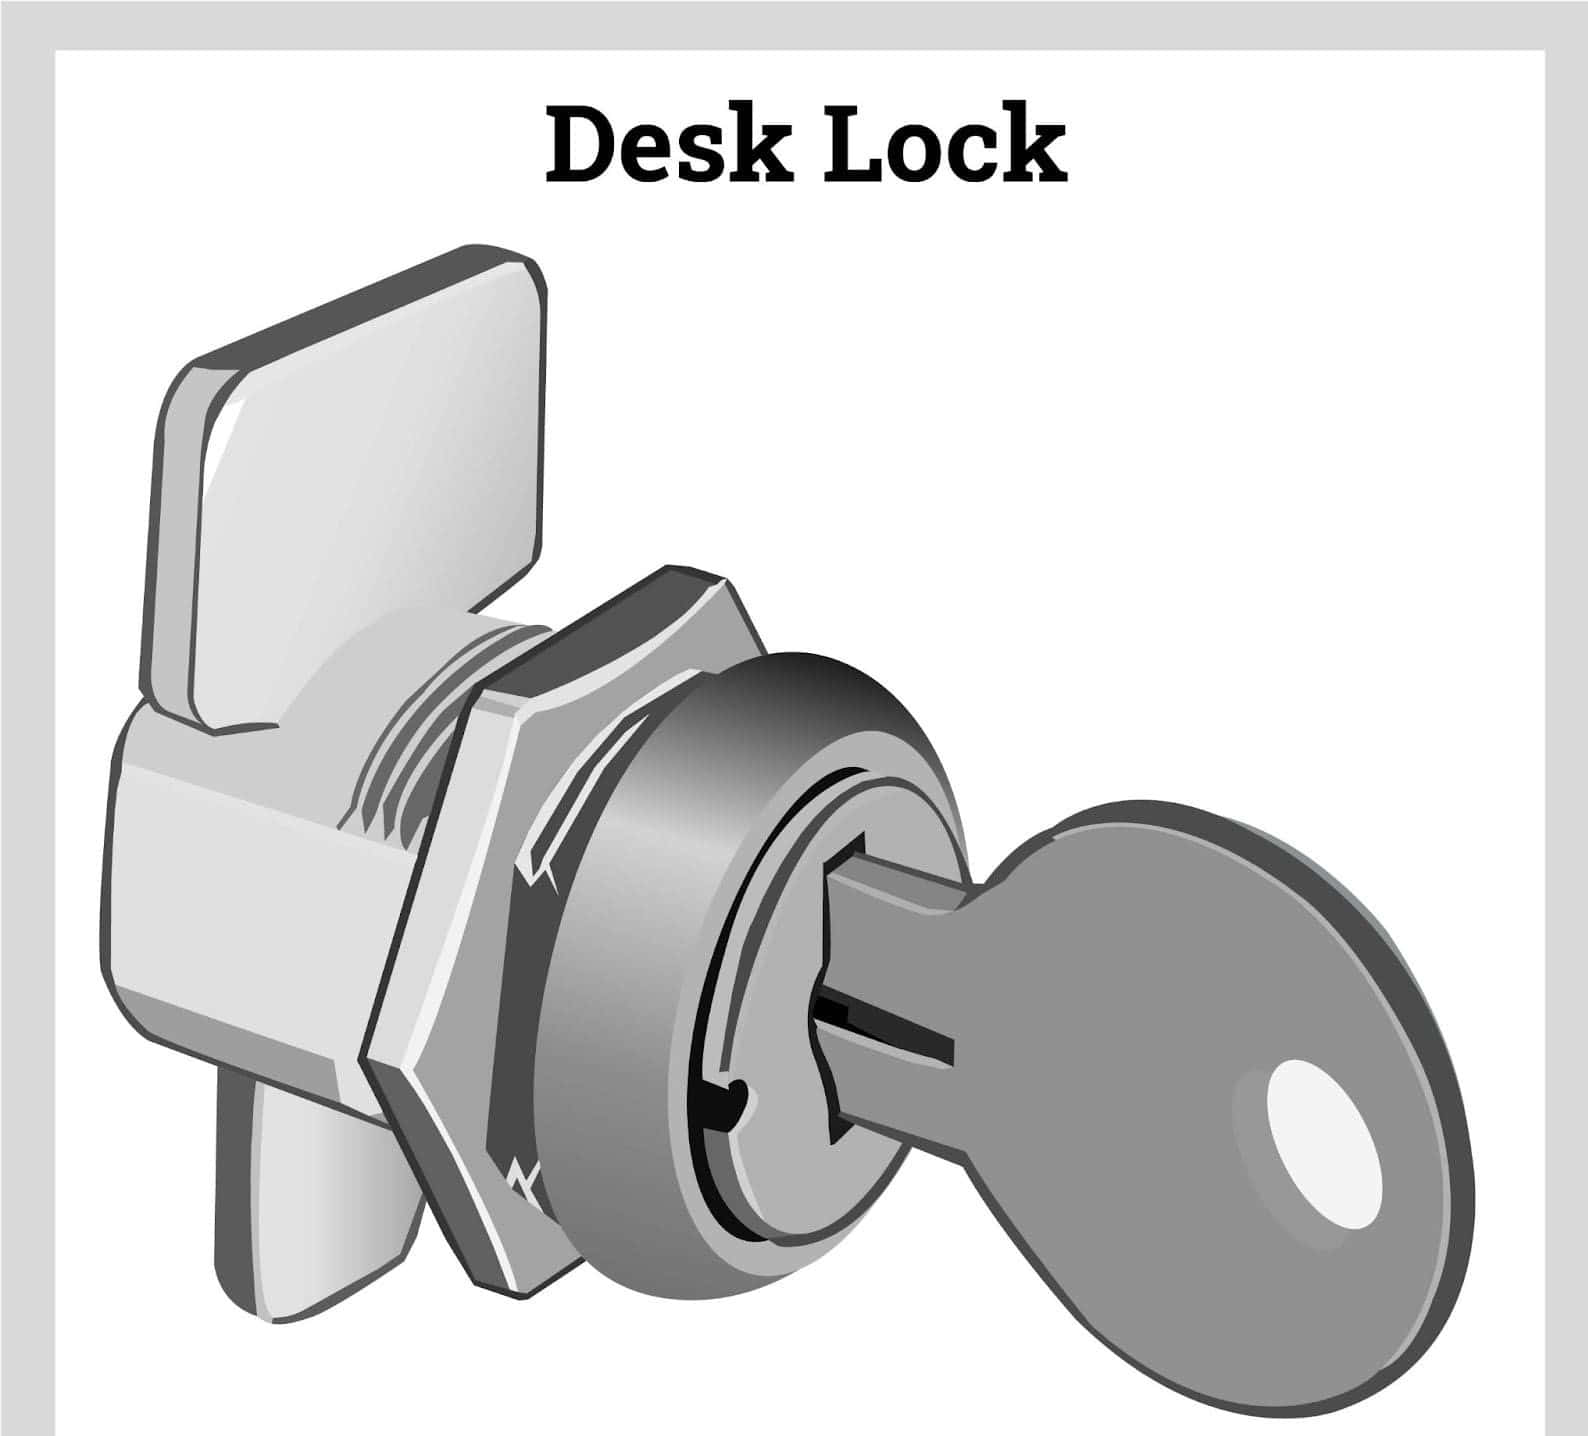 A Desk Lock With A Key